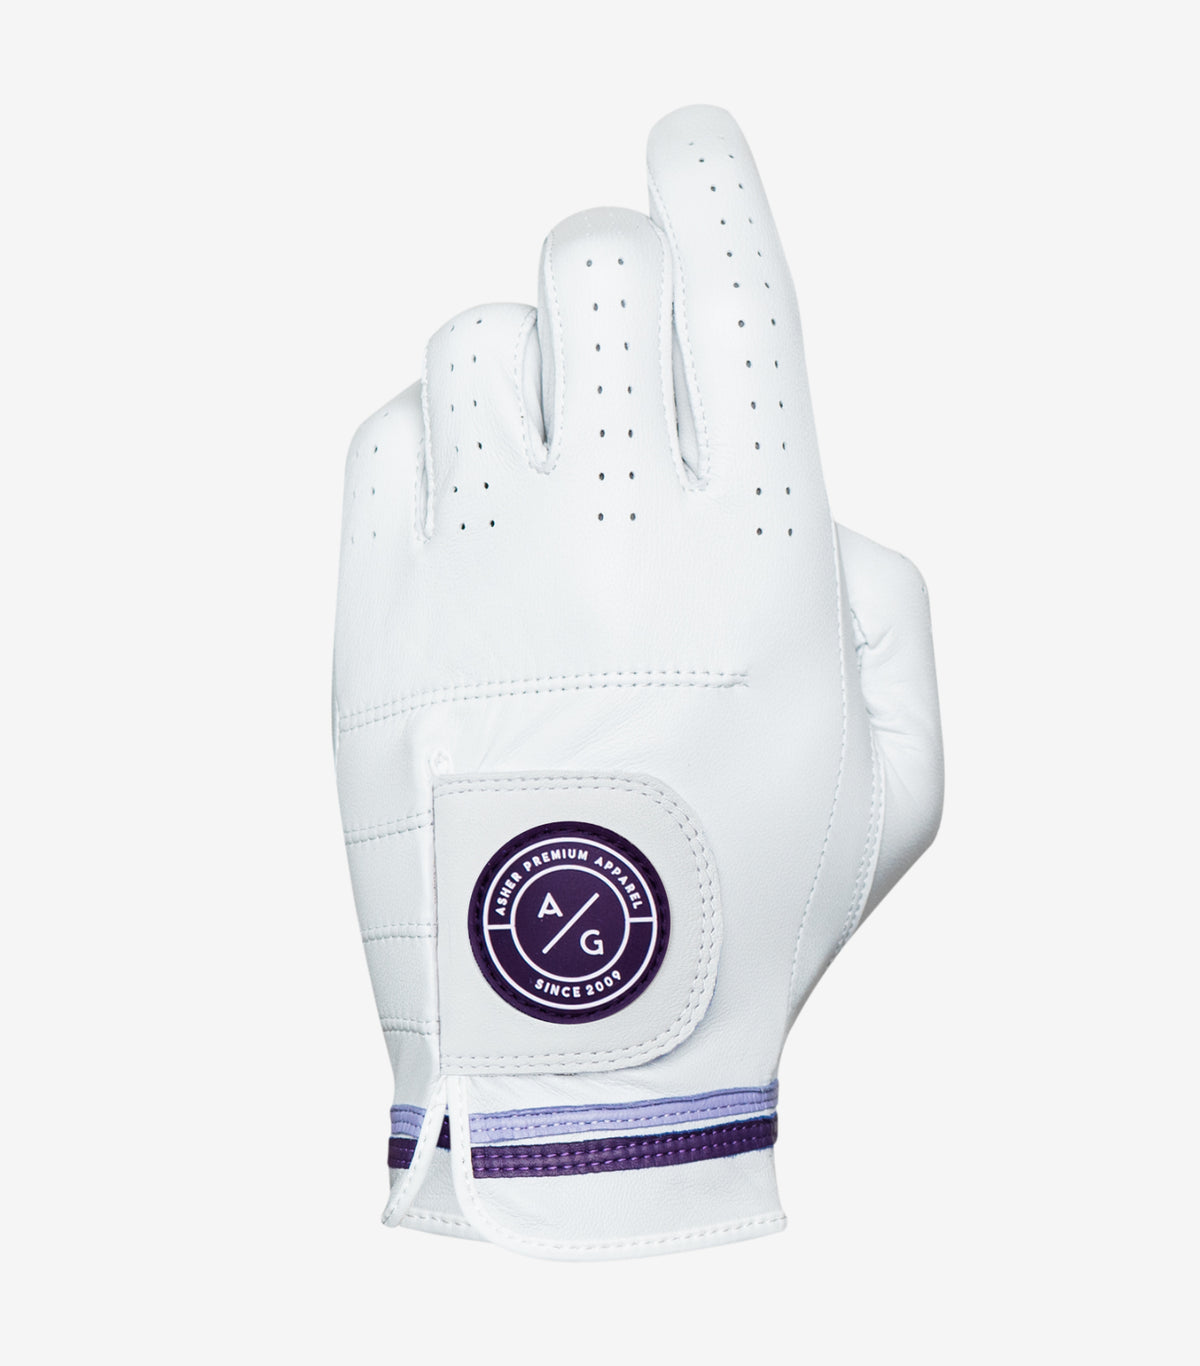 All Gloves | Right & Left Hand | Asher Golf